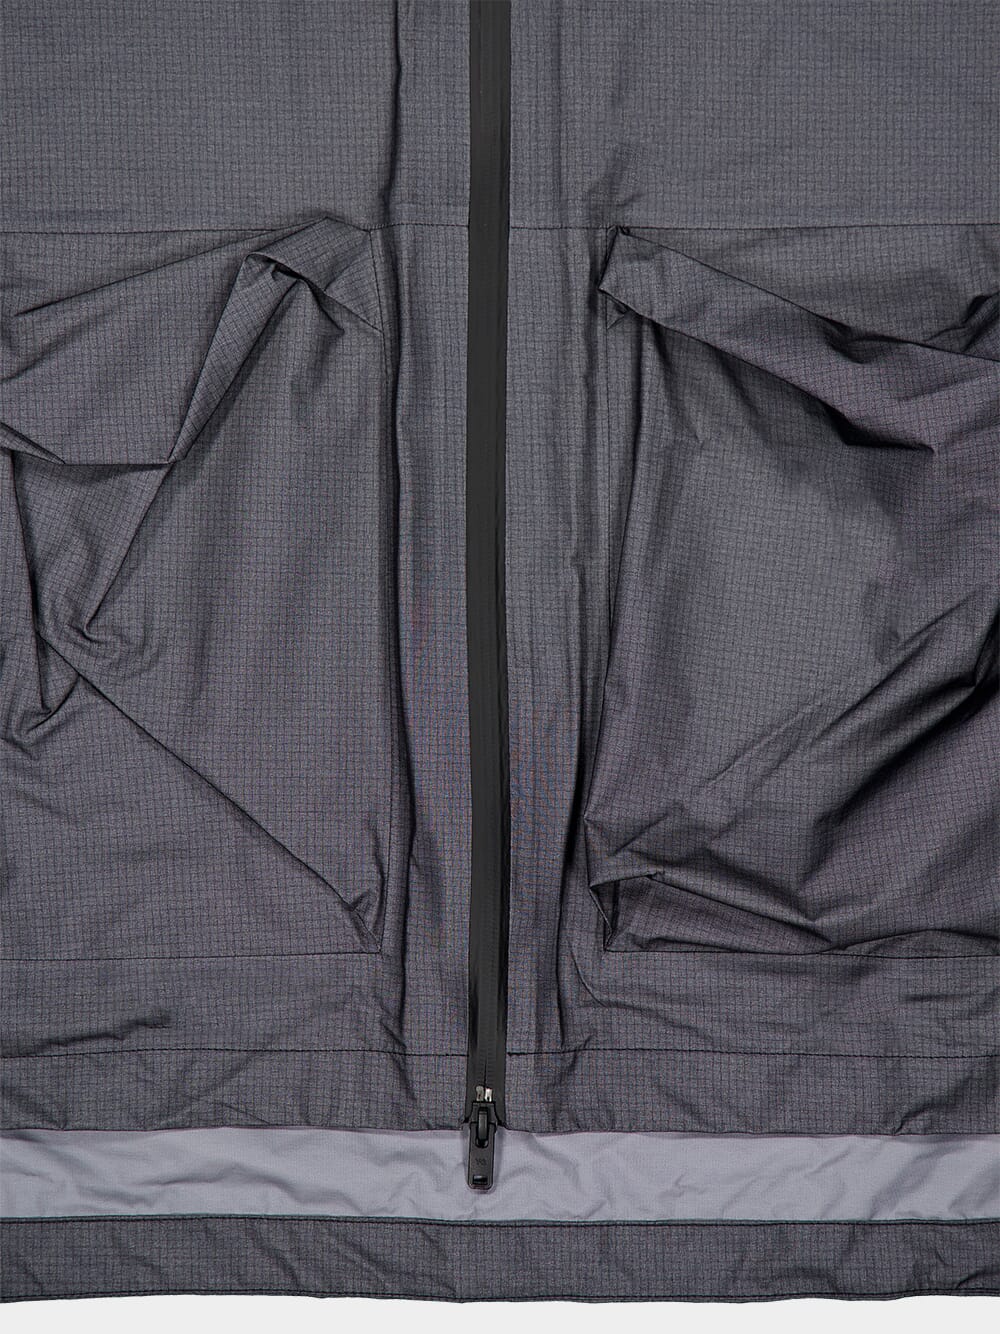 GORE-TEX Performance Jacket